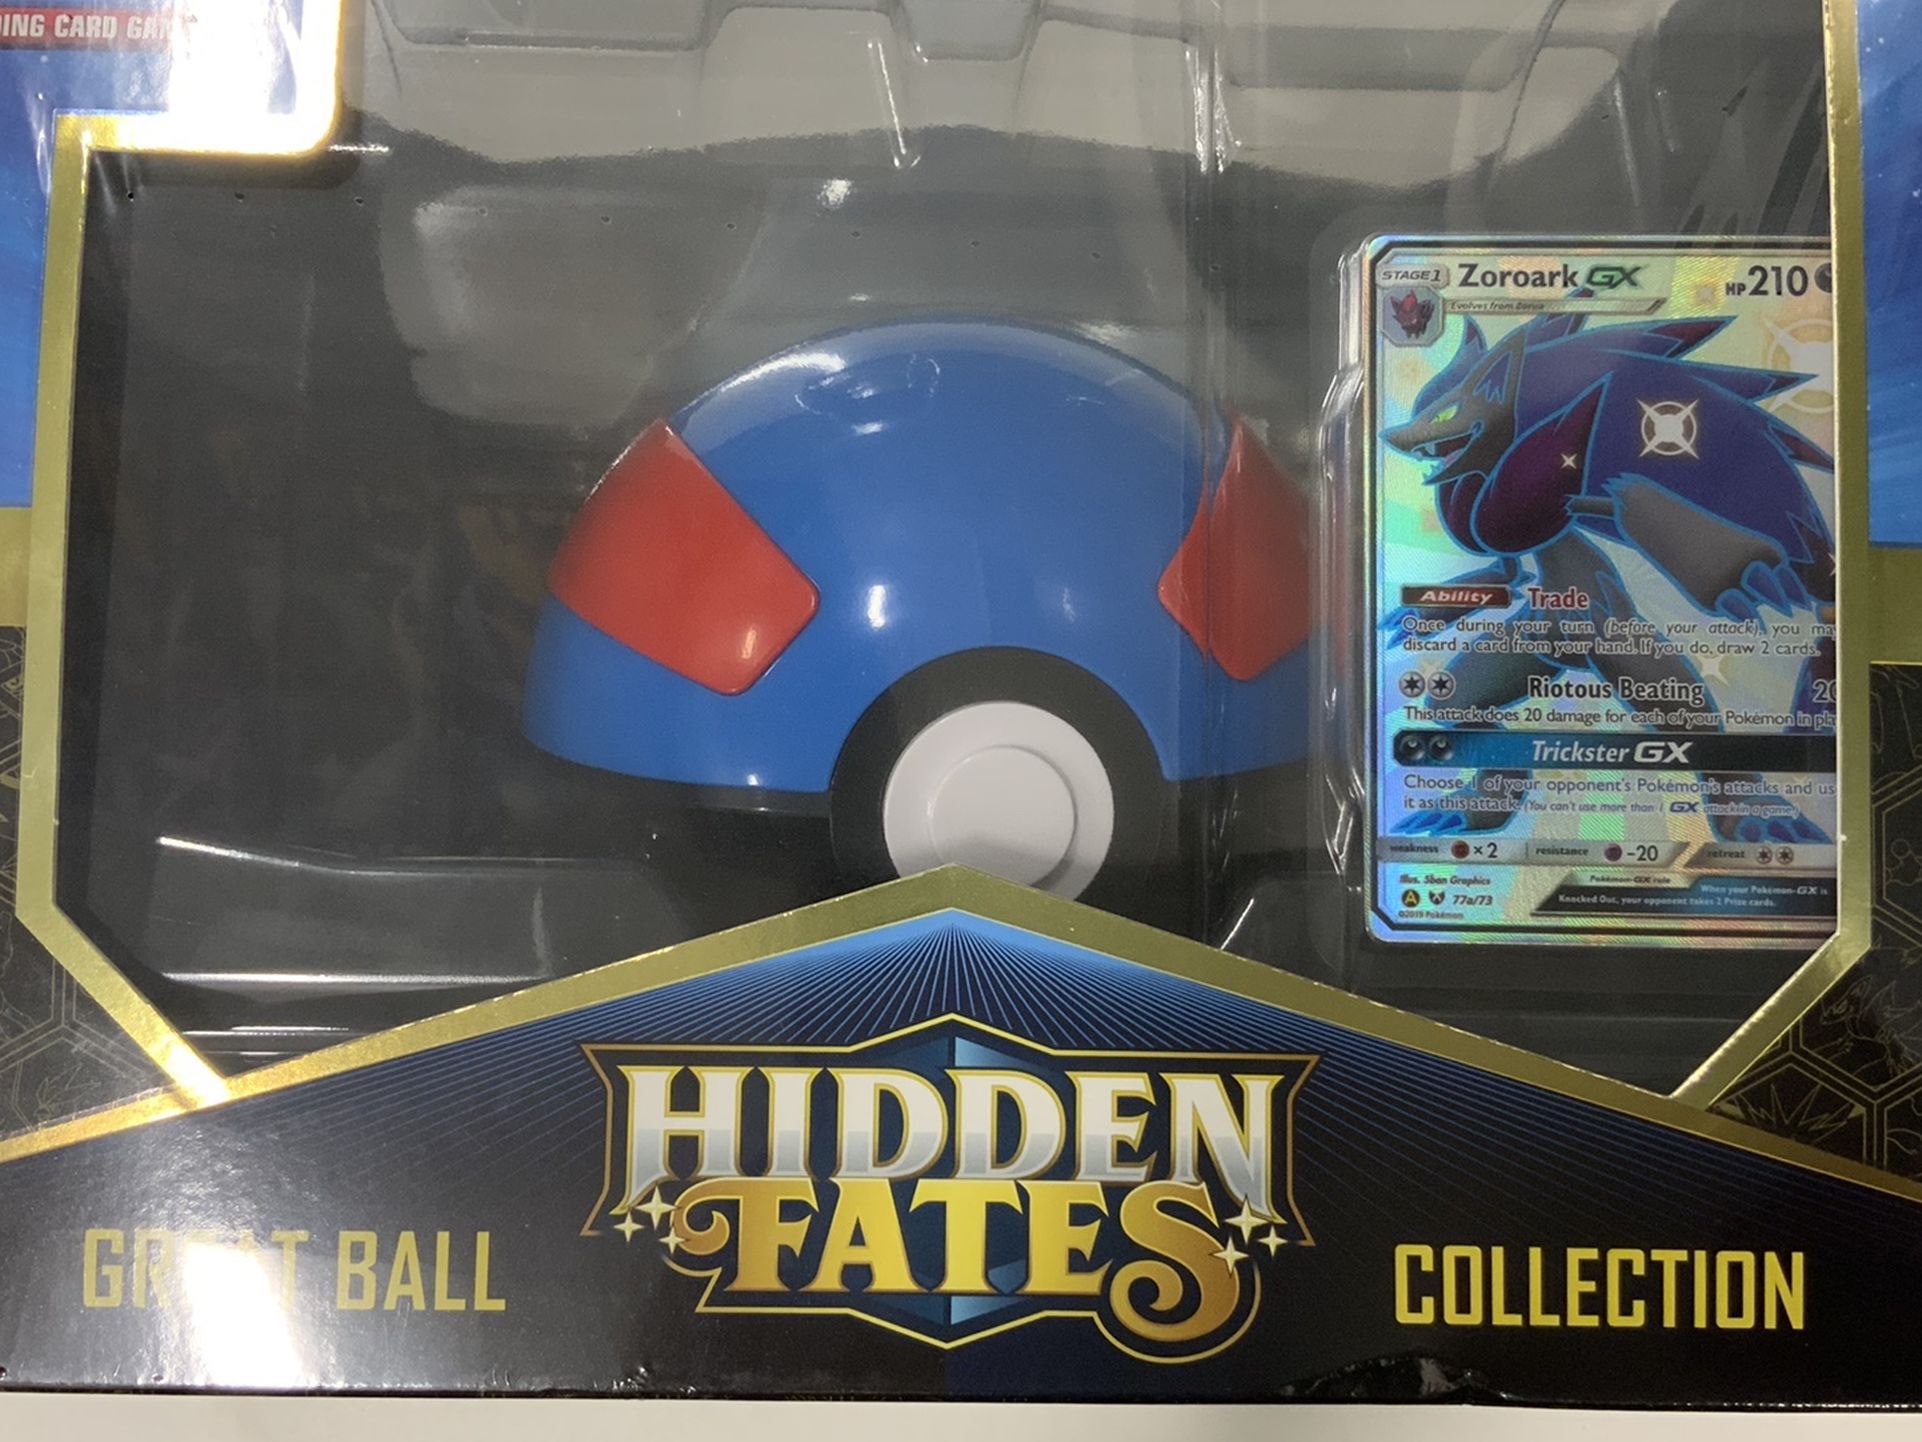 Hidden Fates Great Ball Collection Box - Siny Zoroark GX